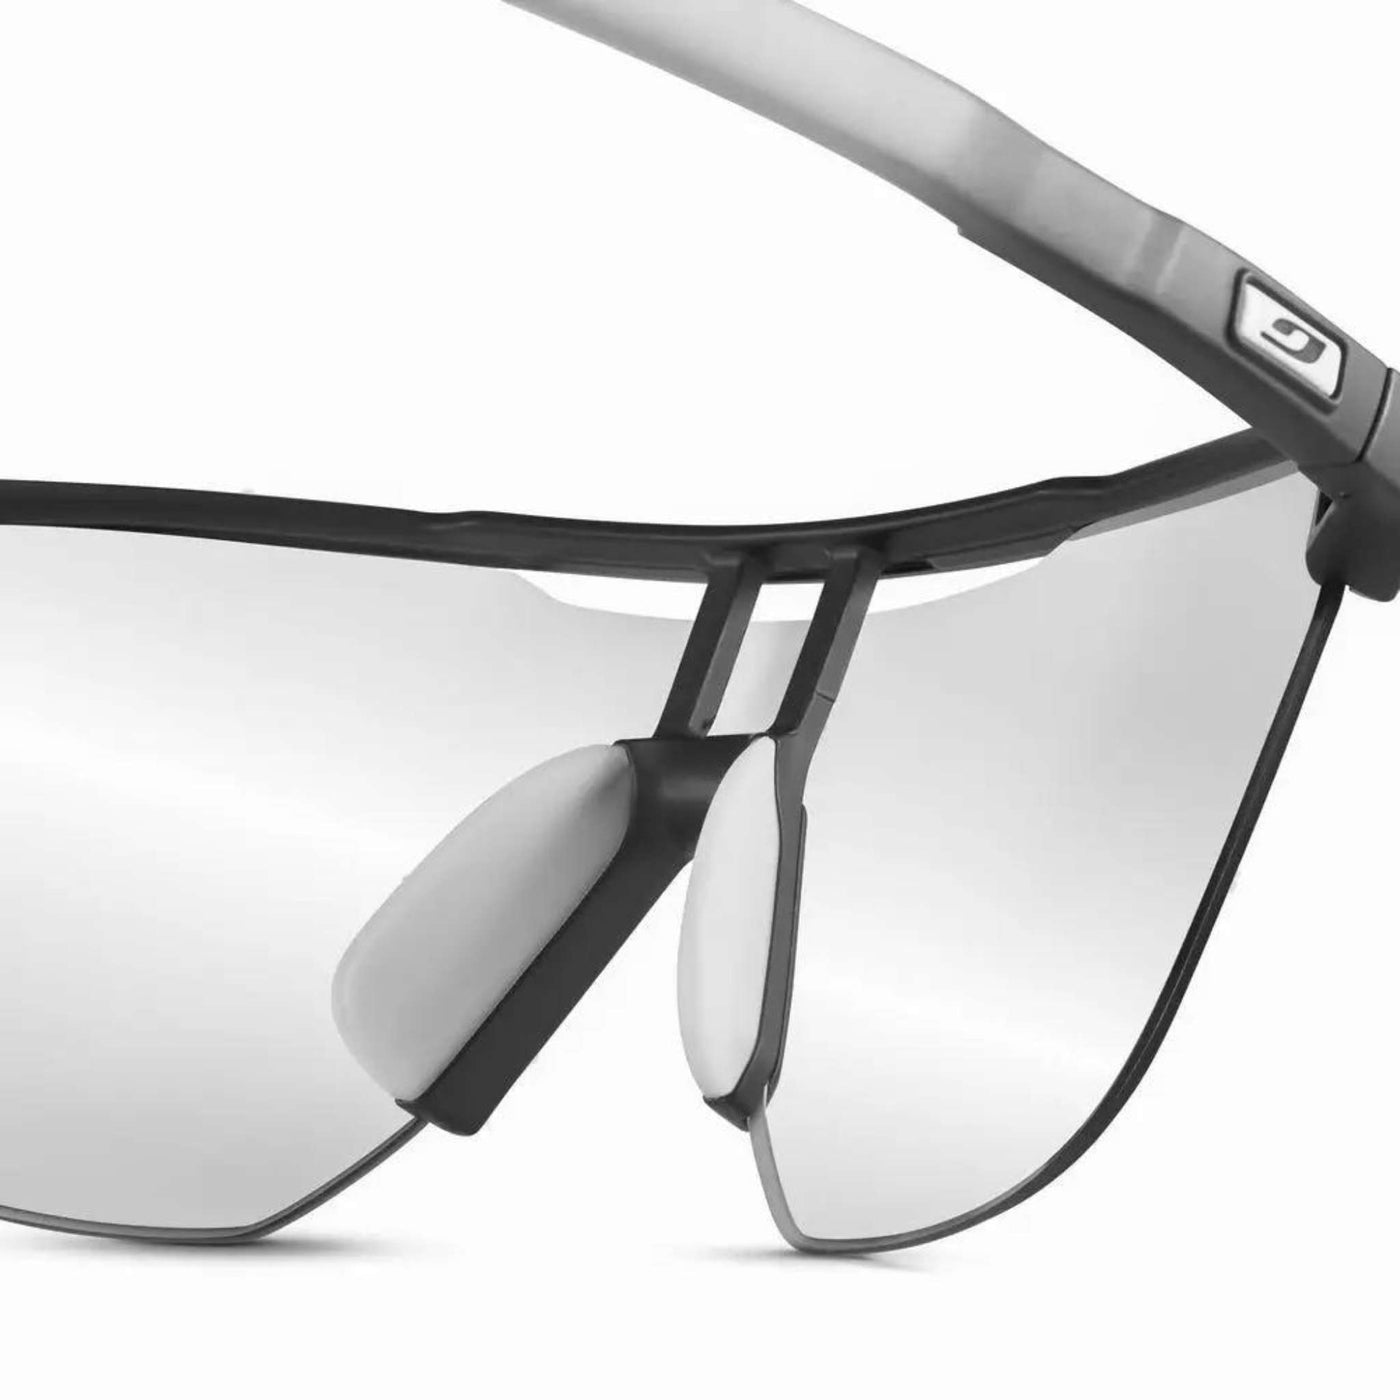 Julbo Frequency Black/Grey Sunglasses - Reactiv 1-3 LAF Lens